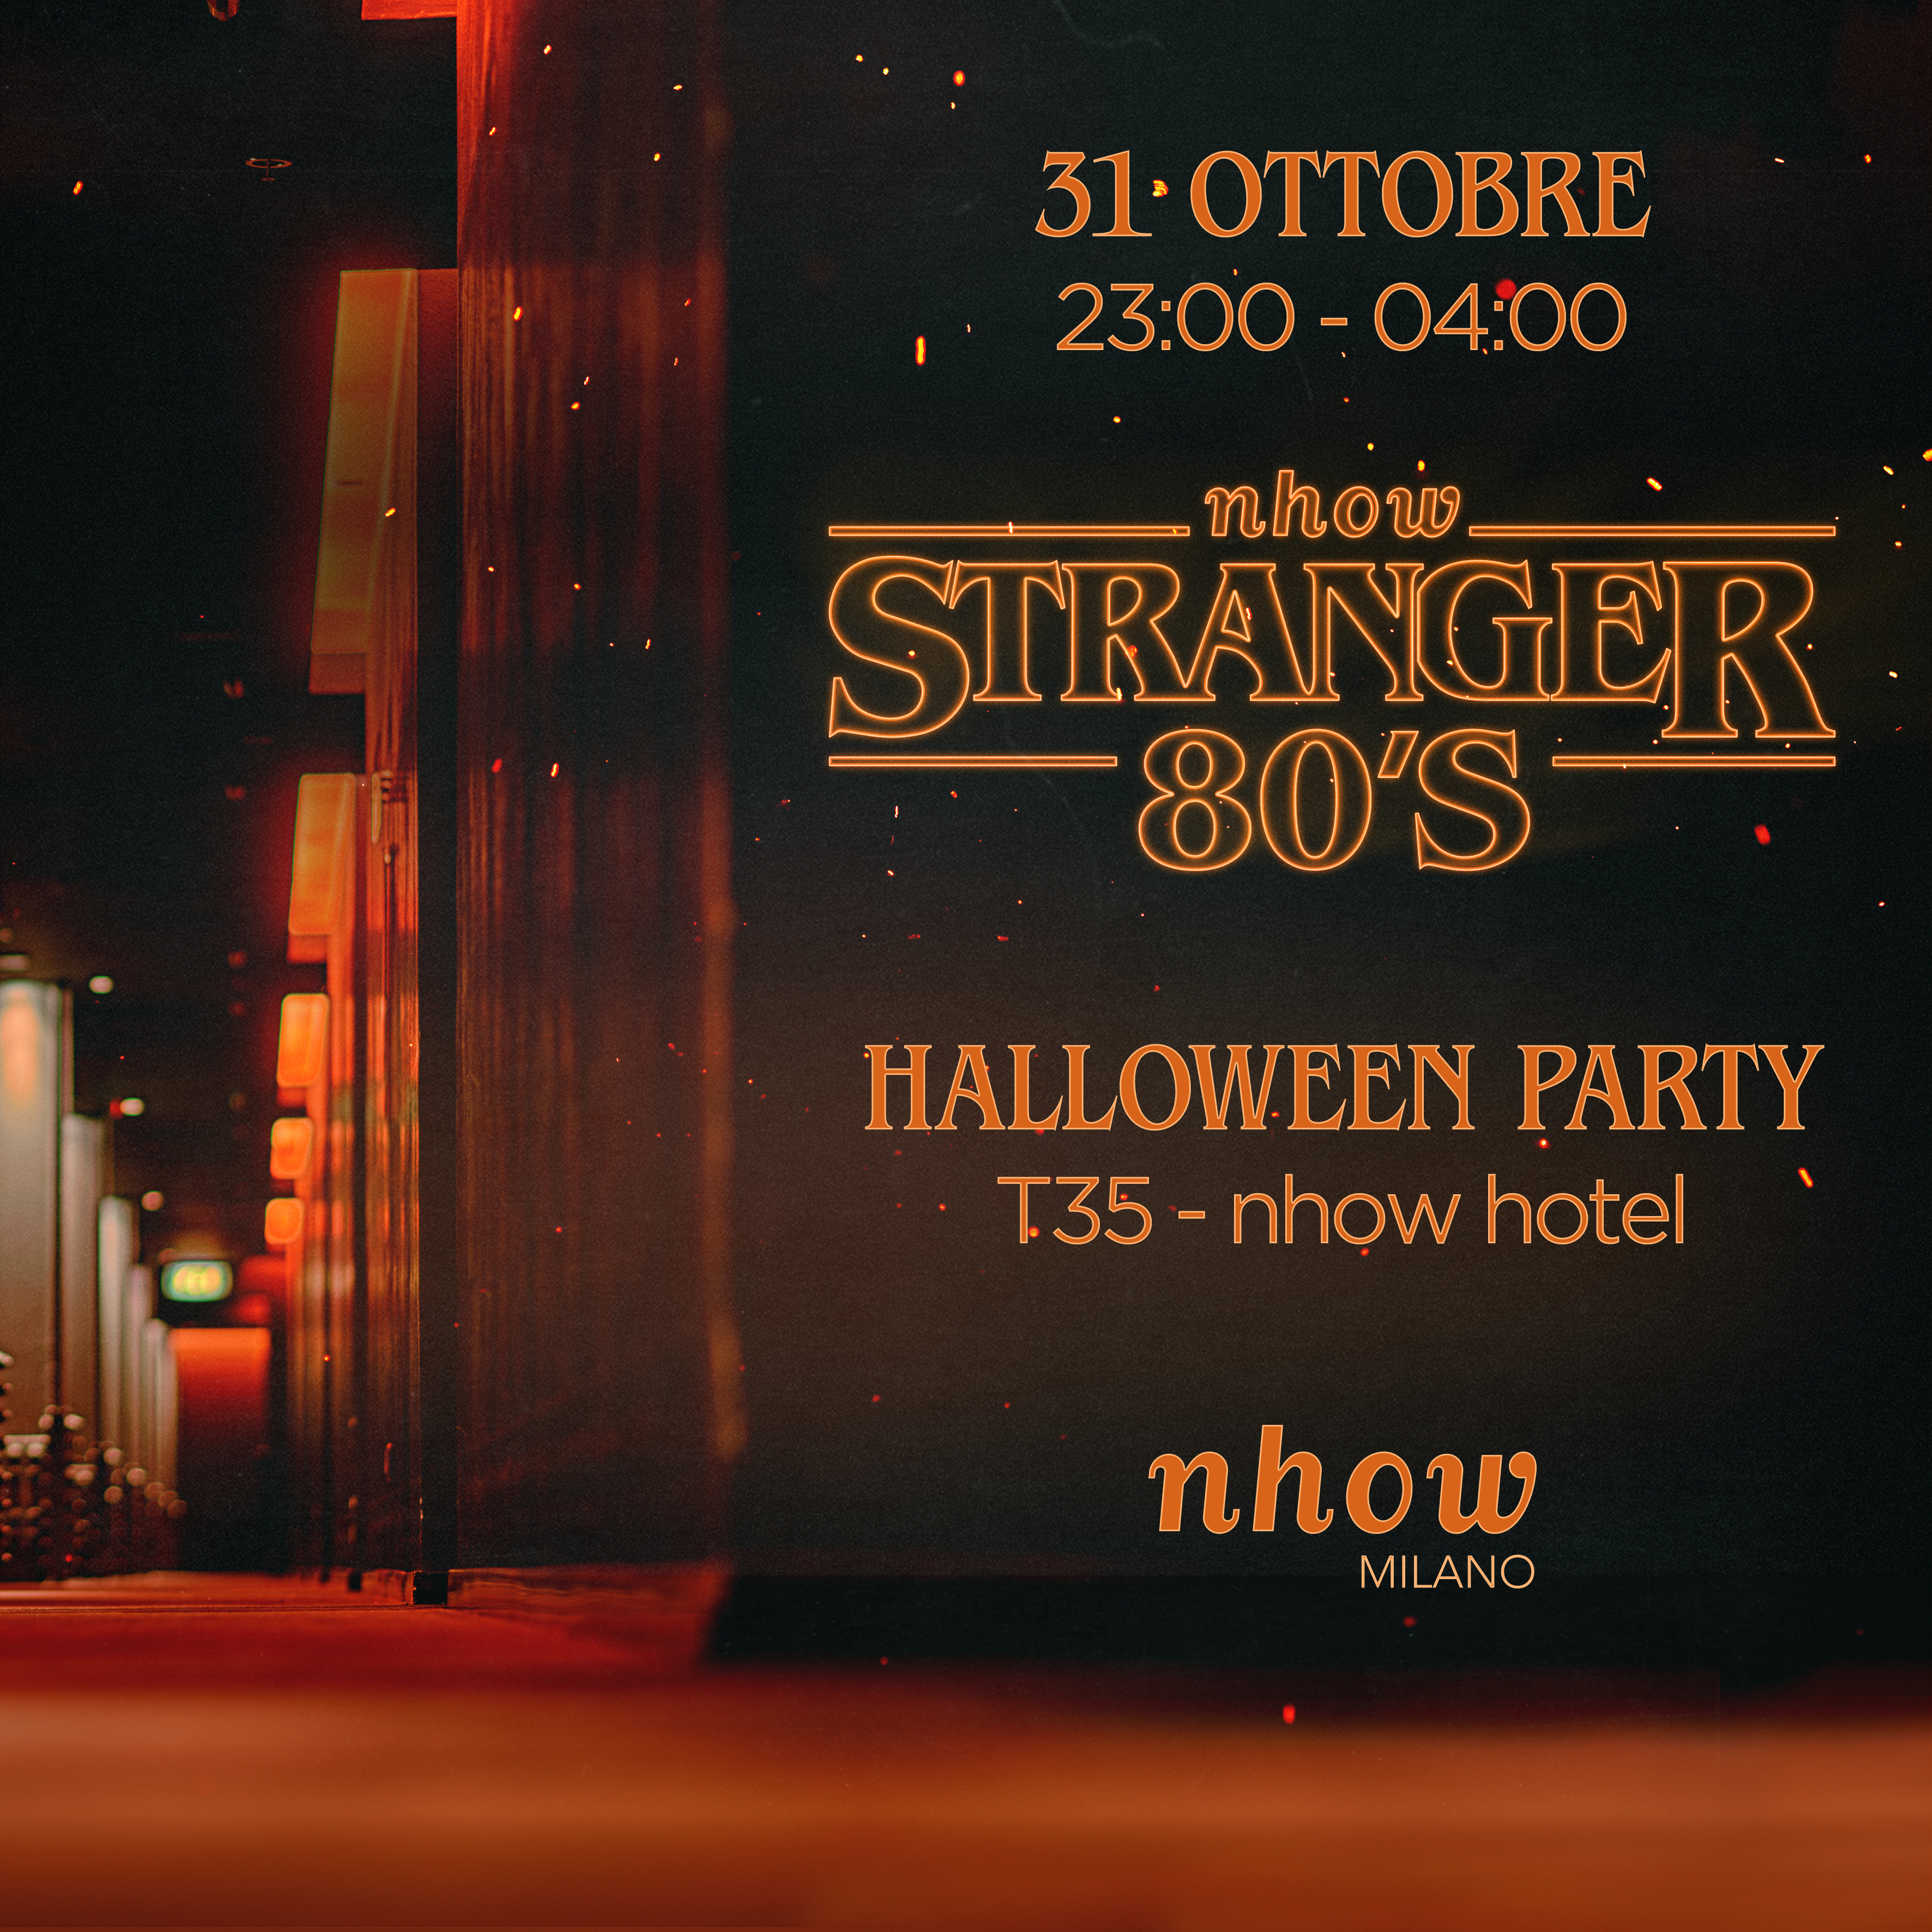 STRANGER 80’s HALLOWEEN PRIVATE PARTY youparti nhow hotel milano tortona